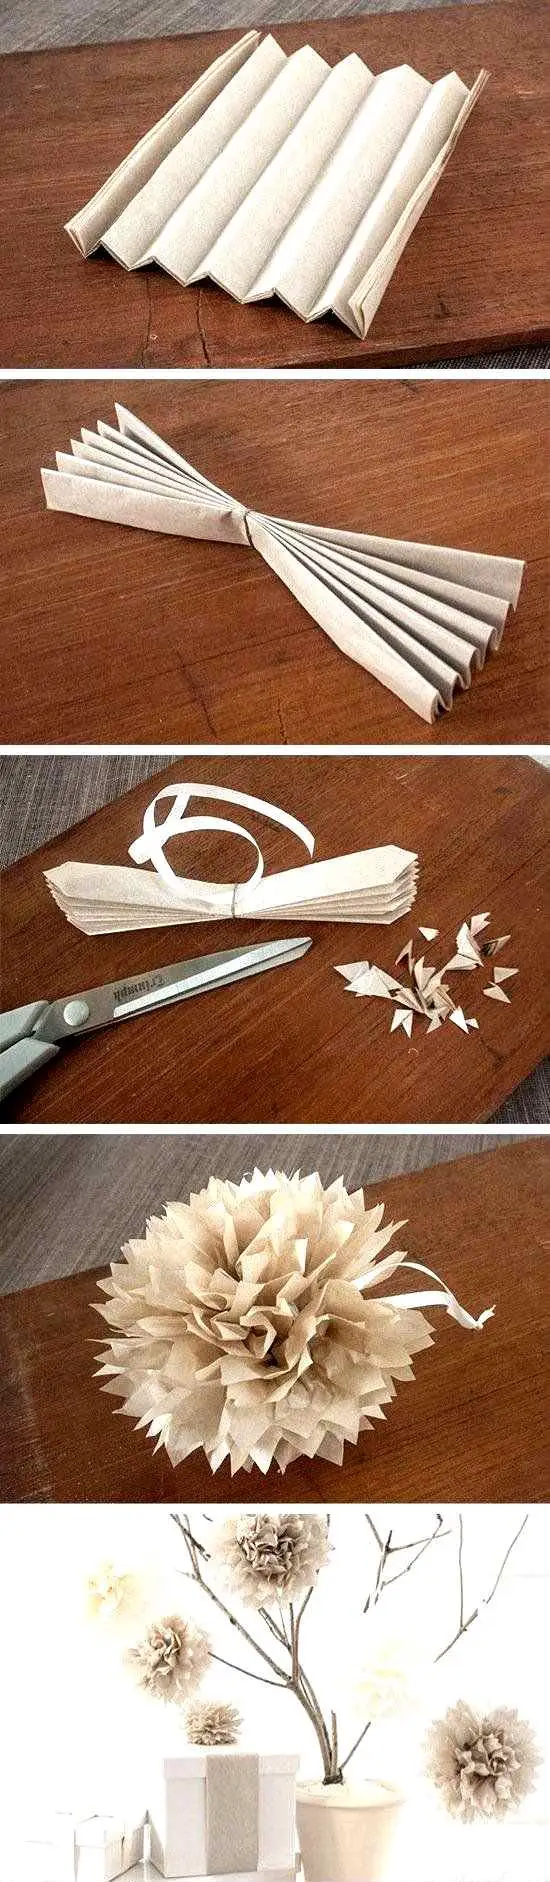 DIY Accordion paper turned flower